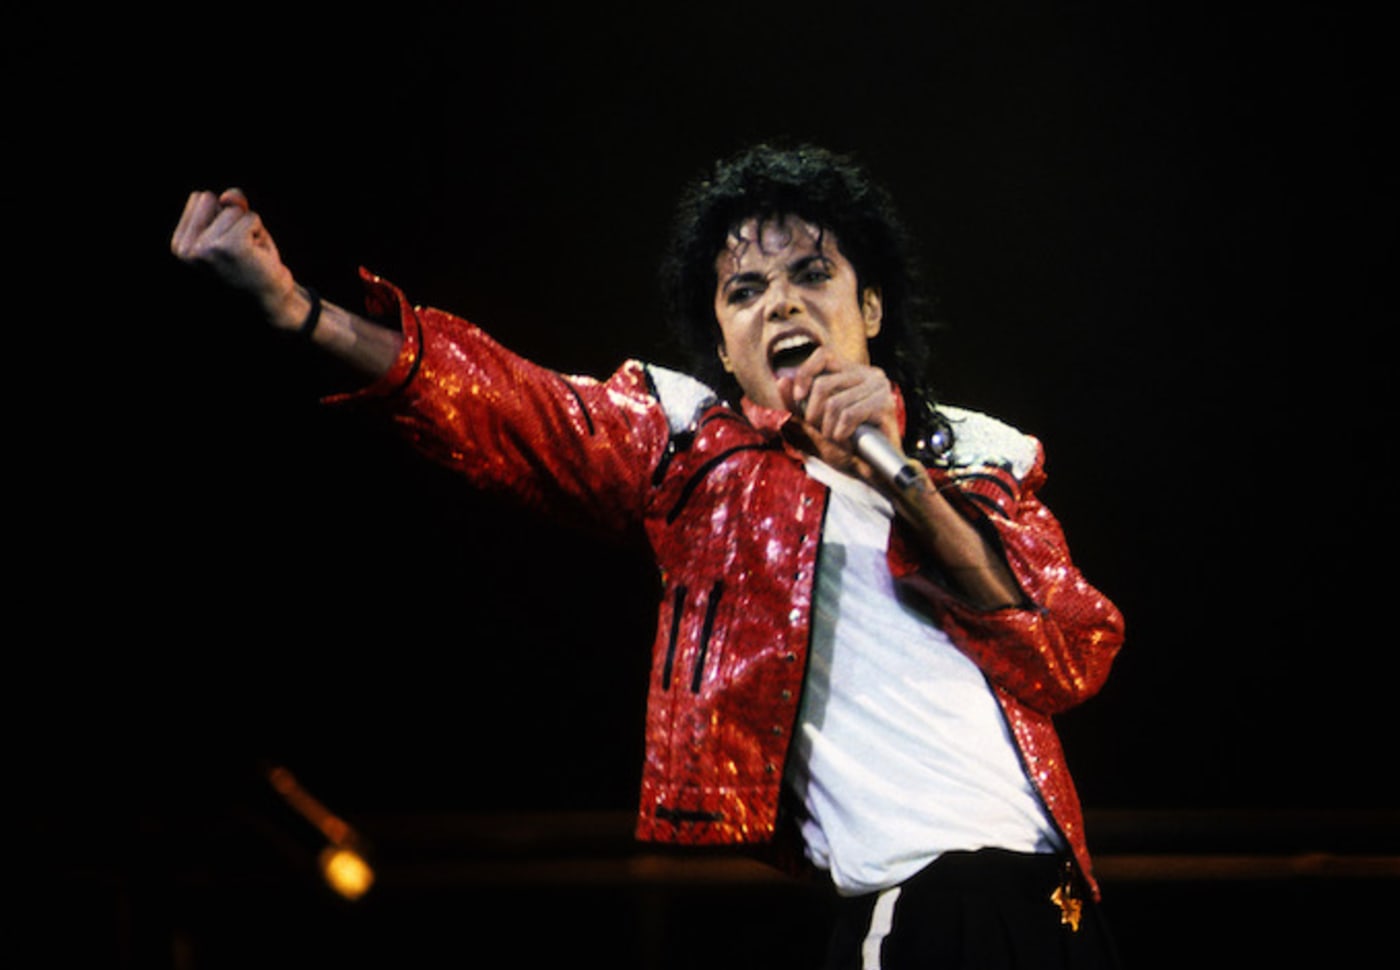 Michael Jackson performing in 1986